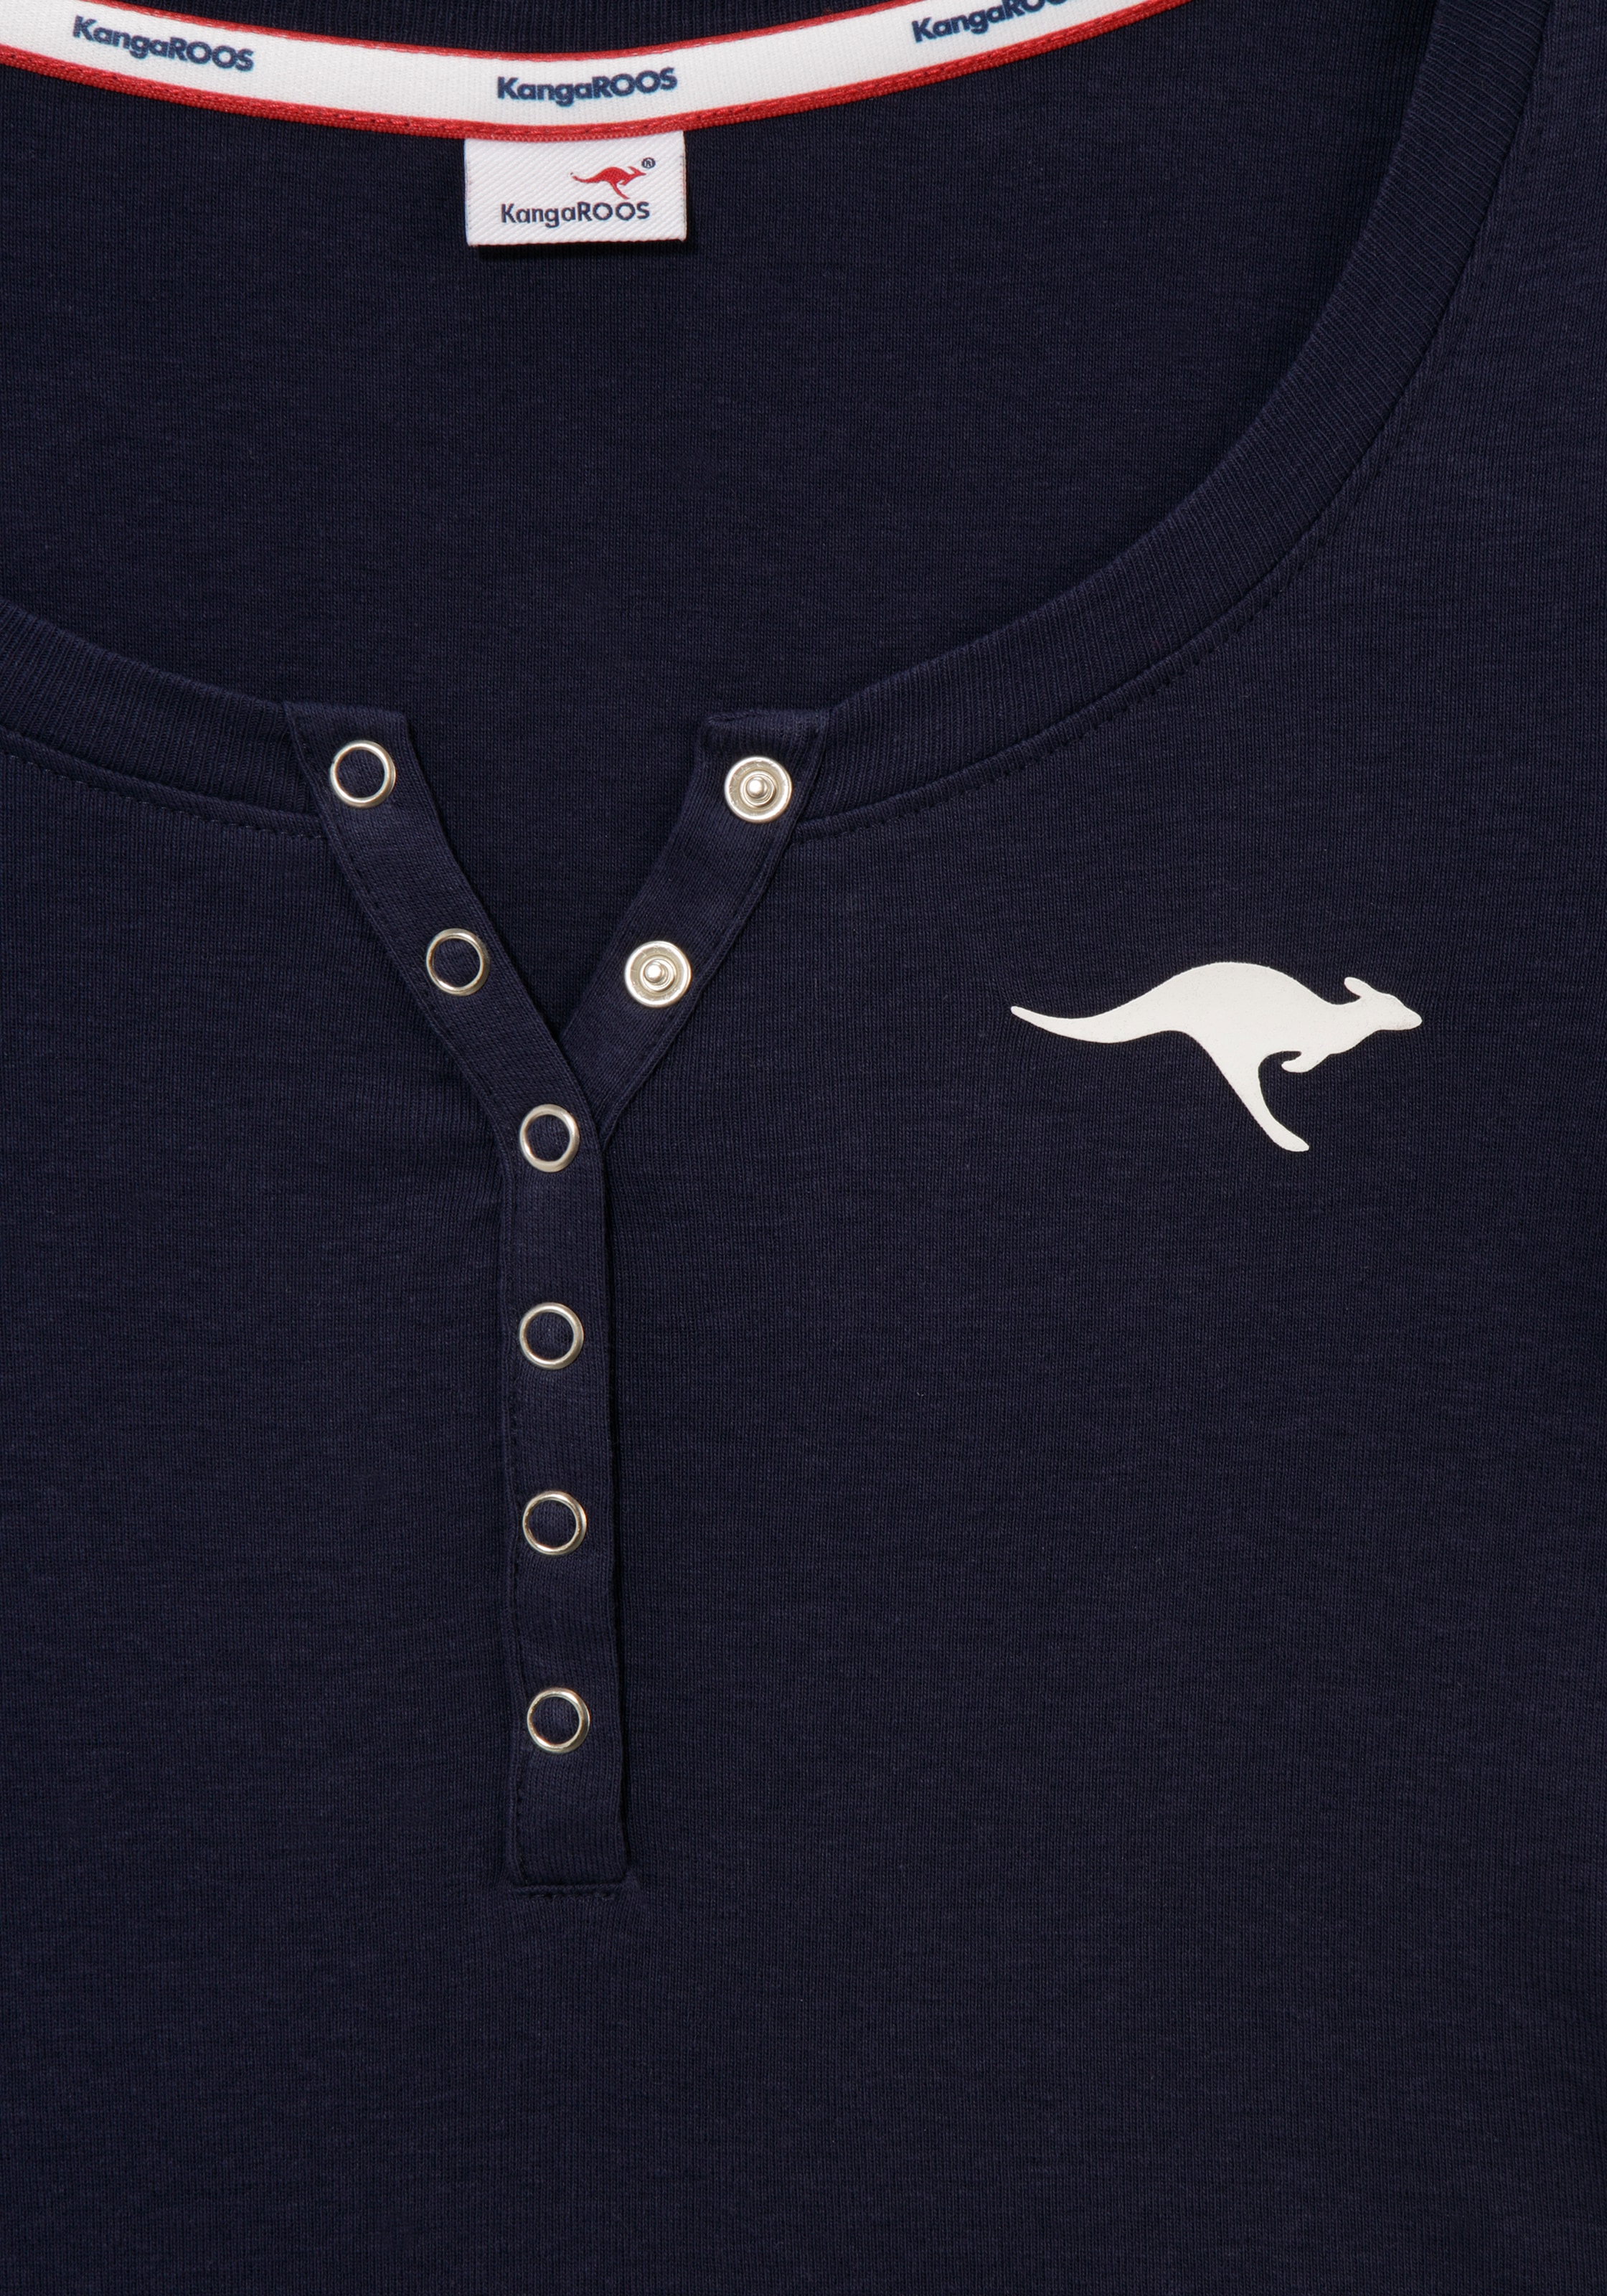 Black Friday KangaROOS Langarmshirt, mit Känguru-Logodruck und Knopfleiste  | BAUR